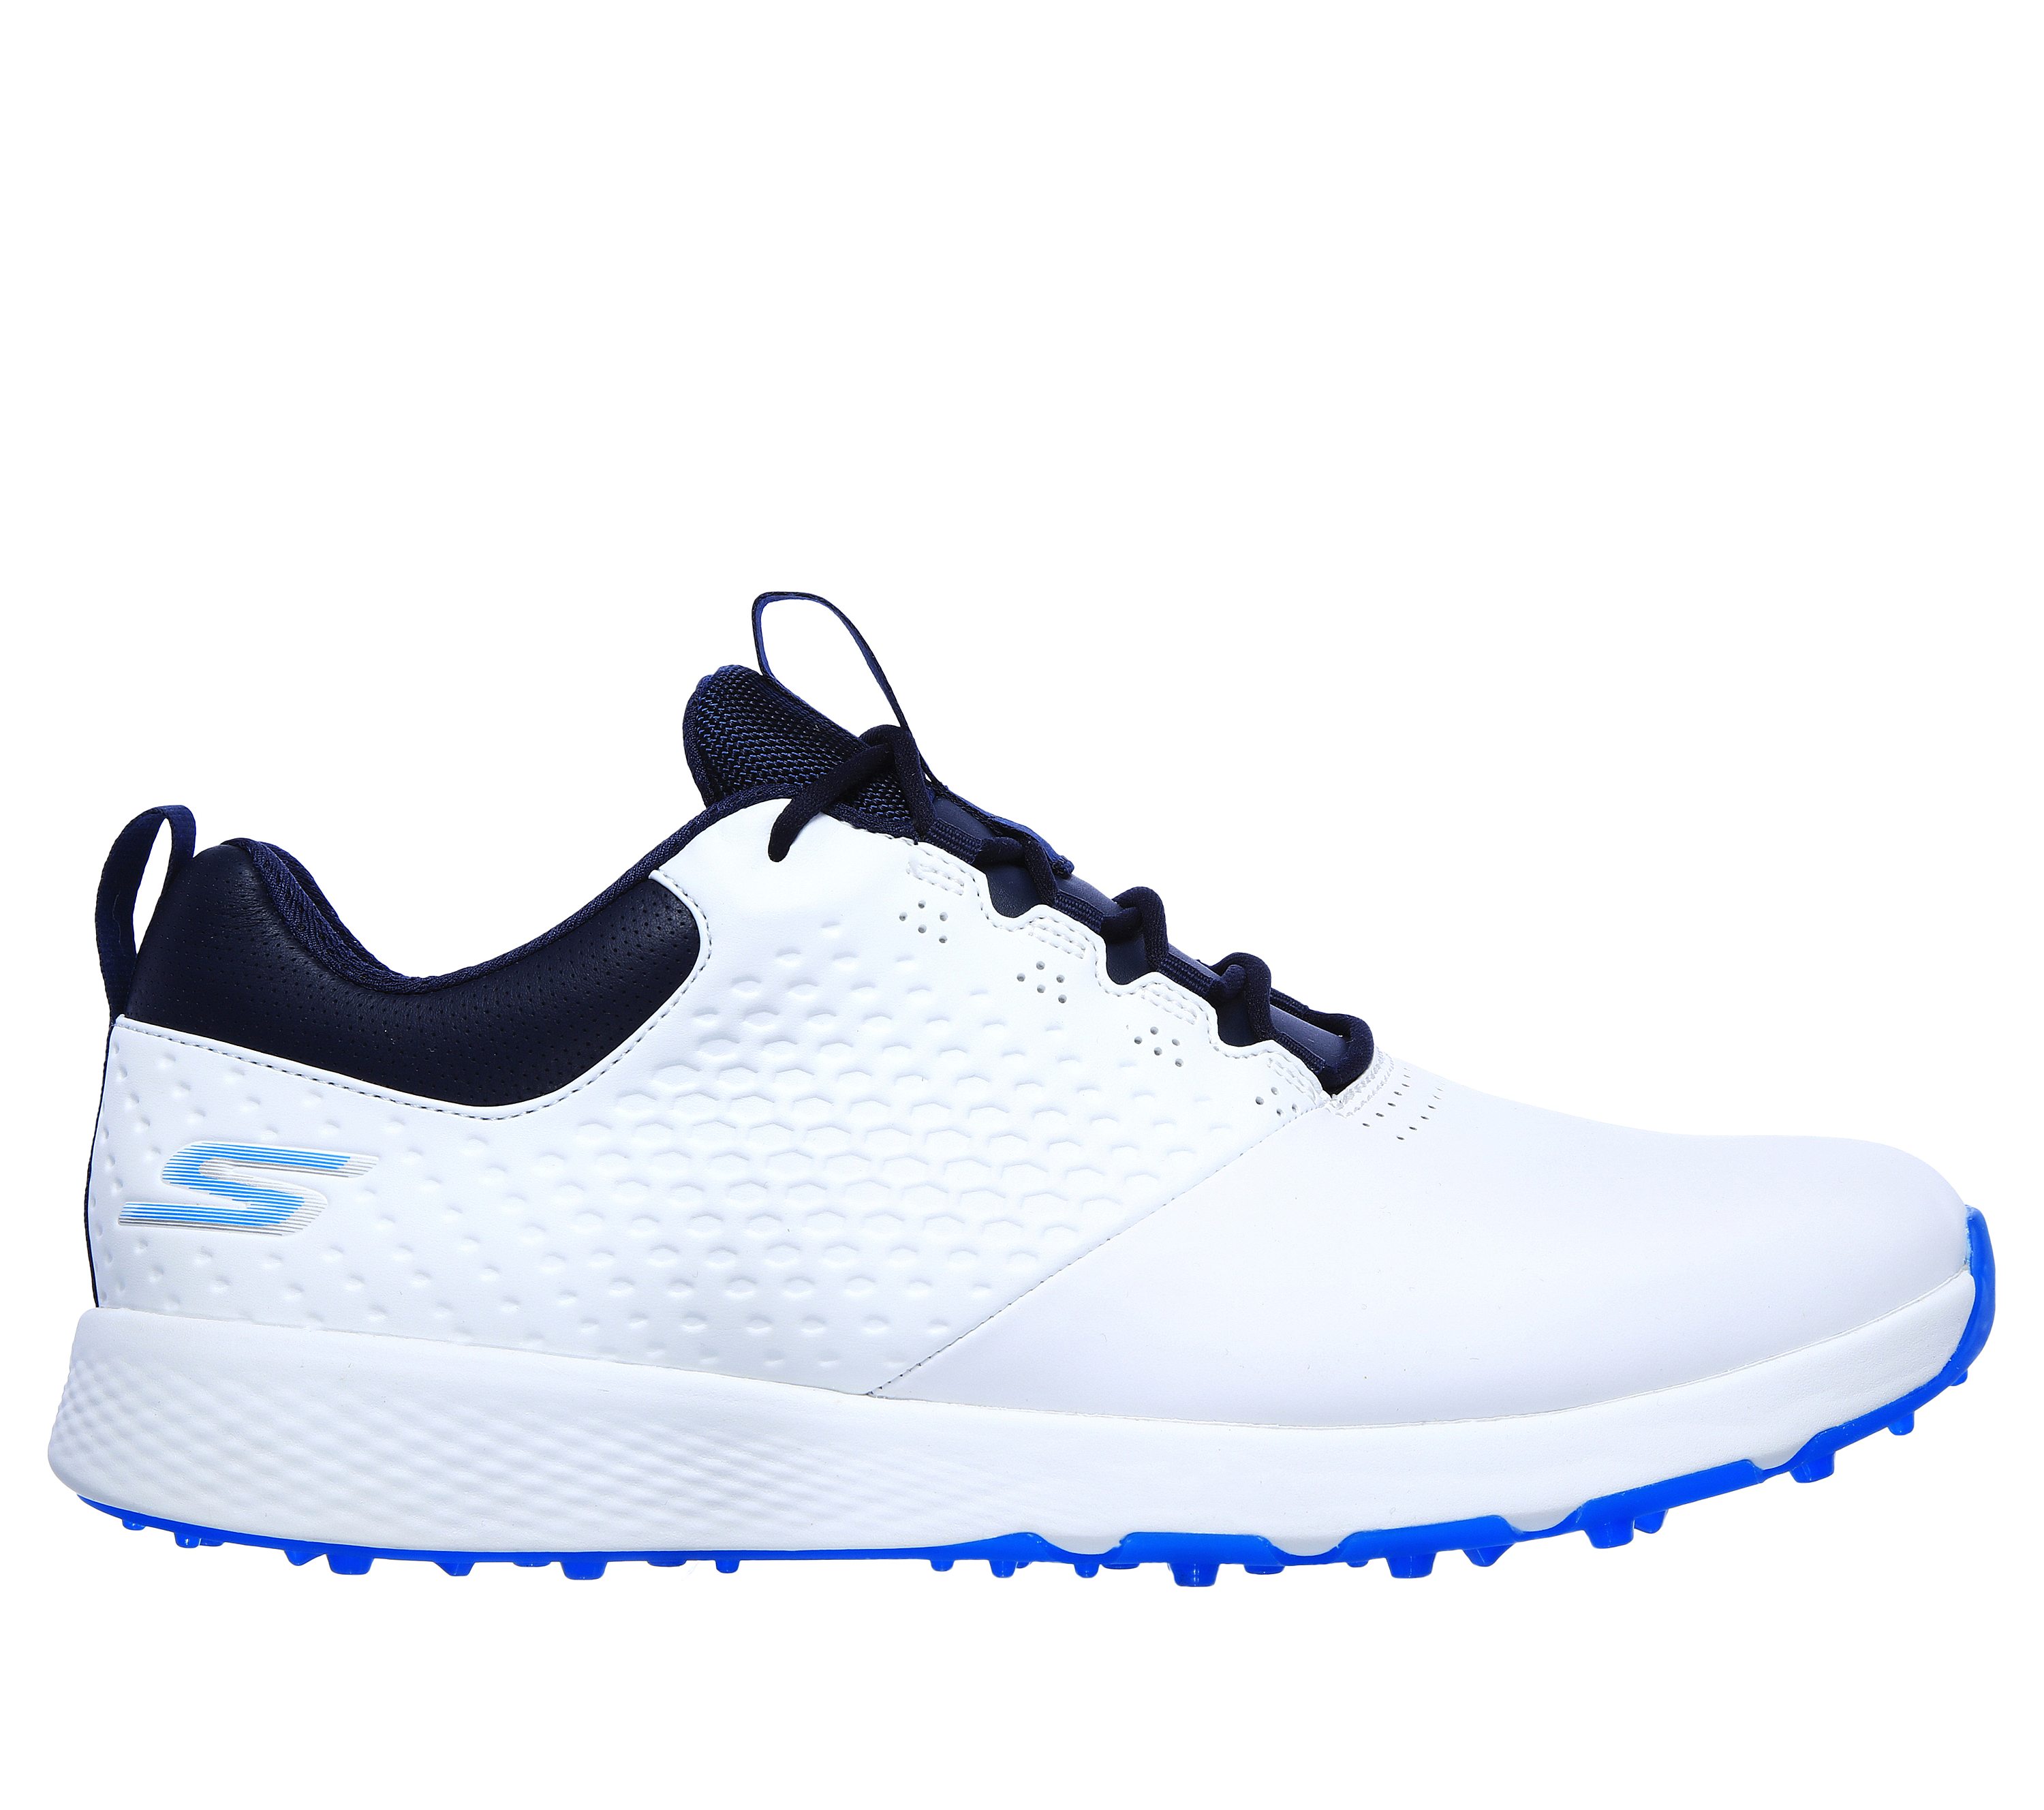 waterproof skechers golf shoes